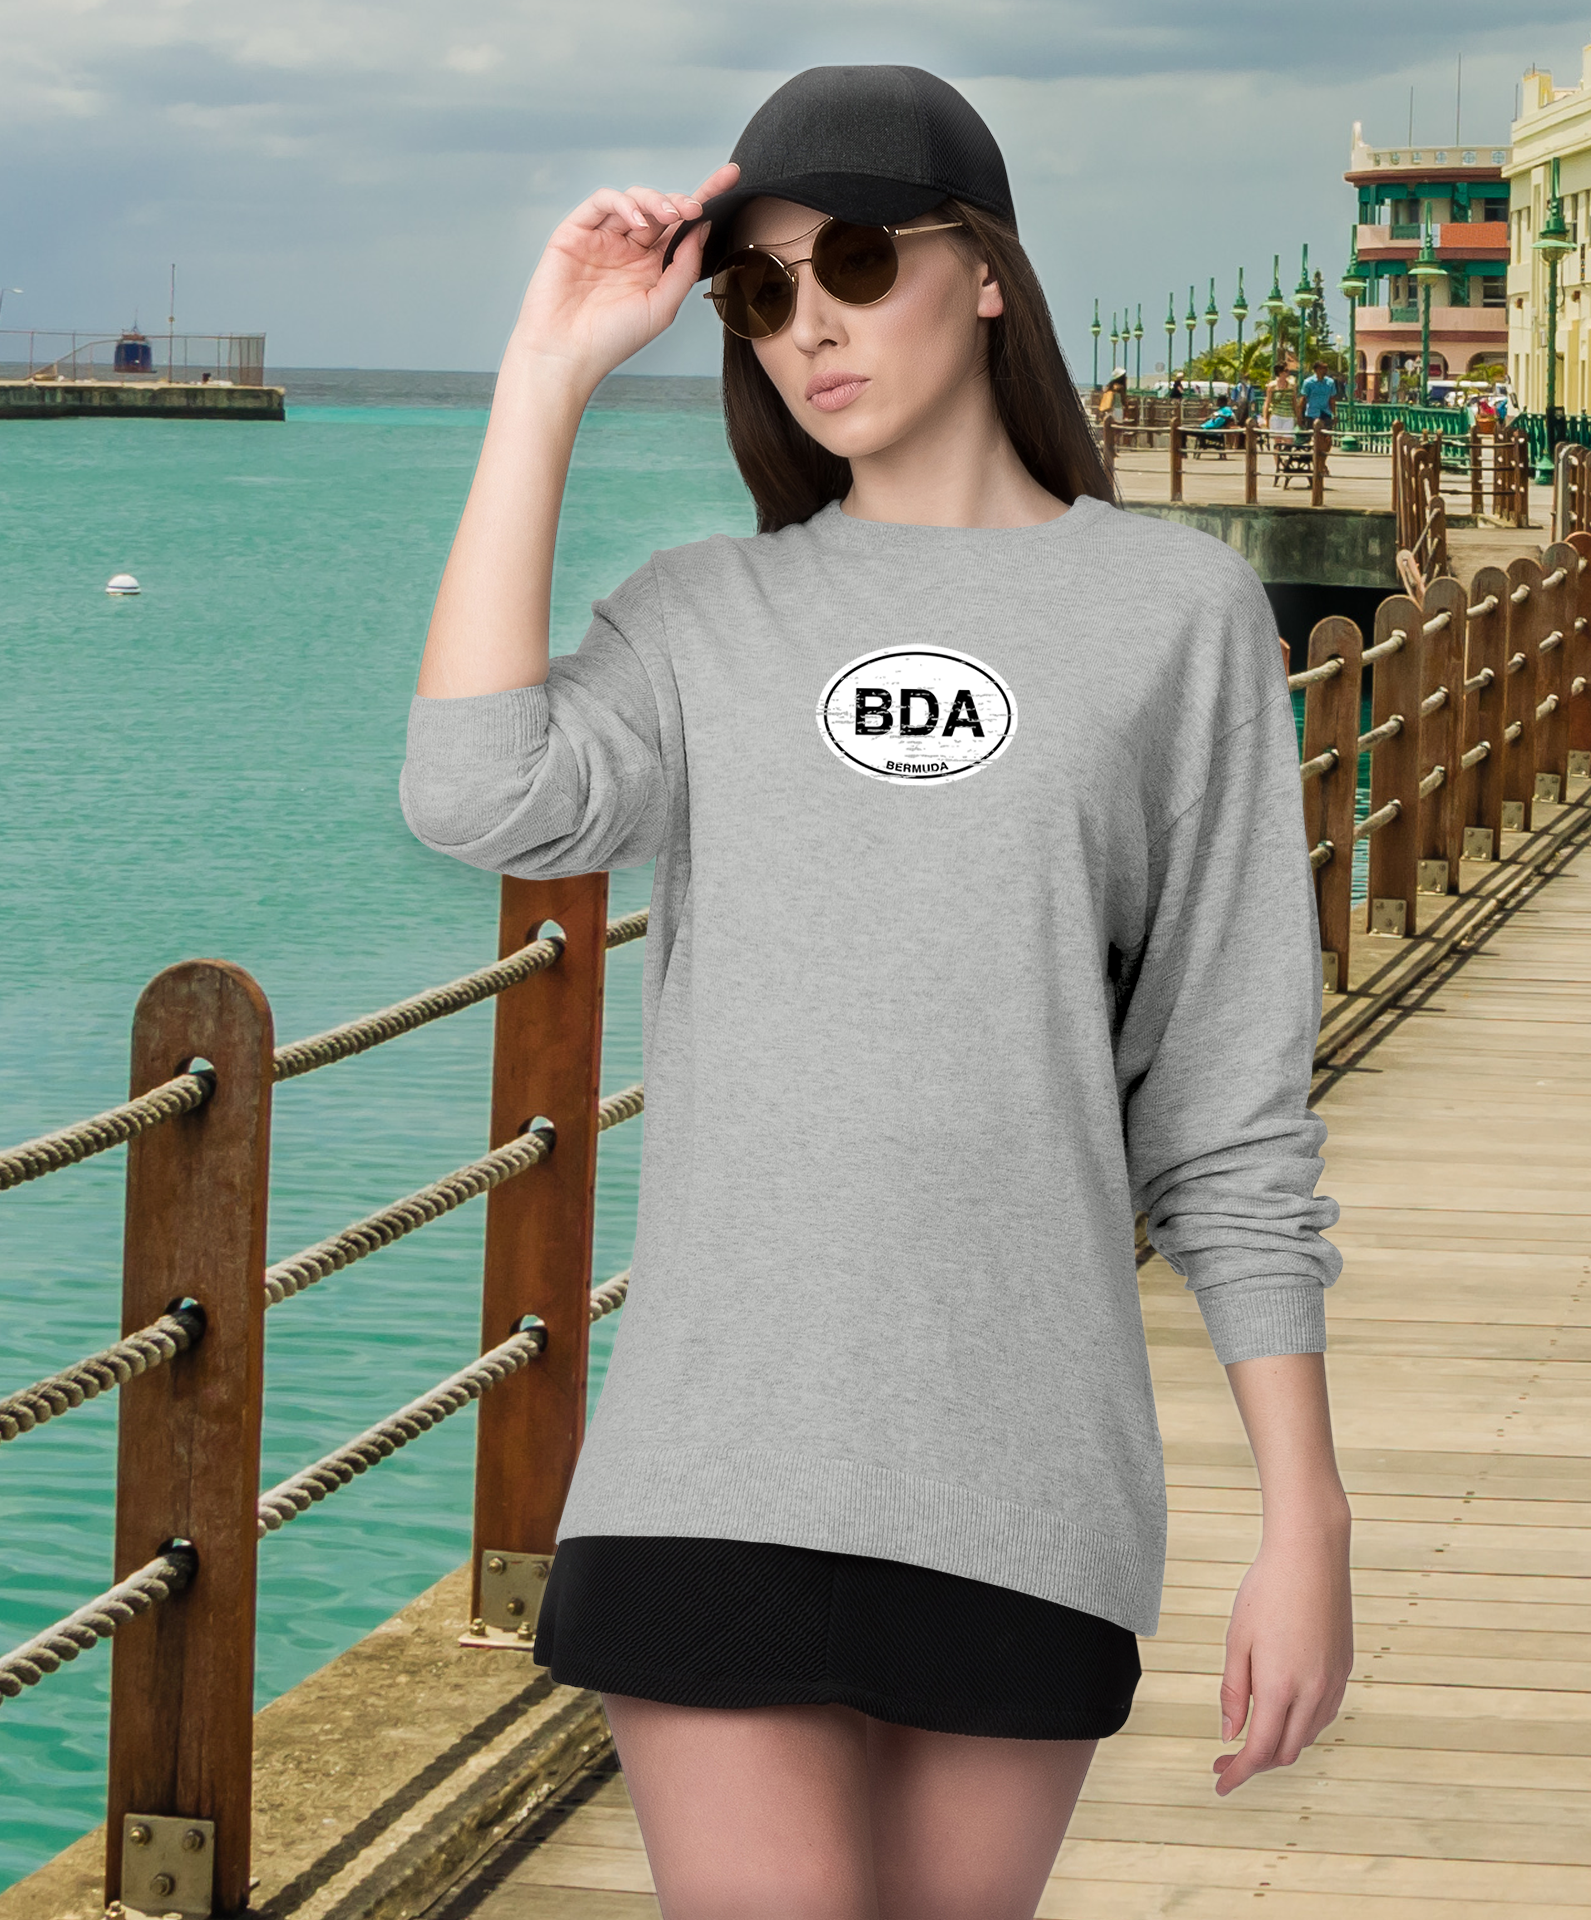 Bermuda Women's Classic Long Sleeve T-Shirts - My Destination Location